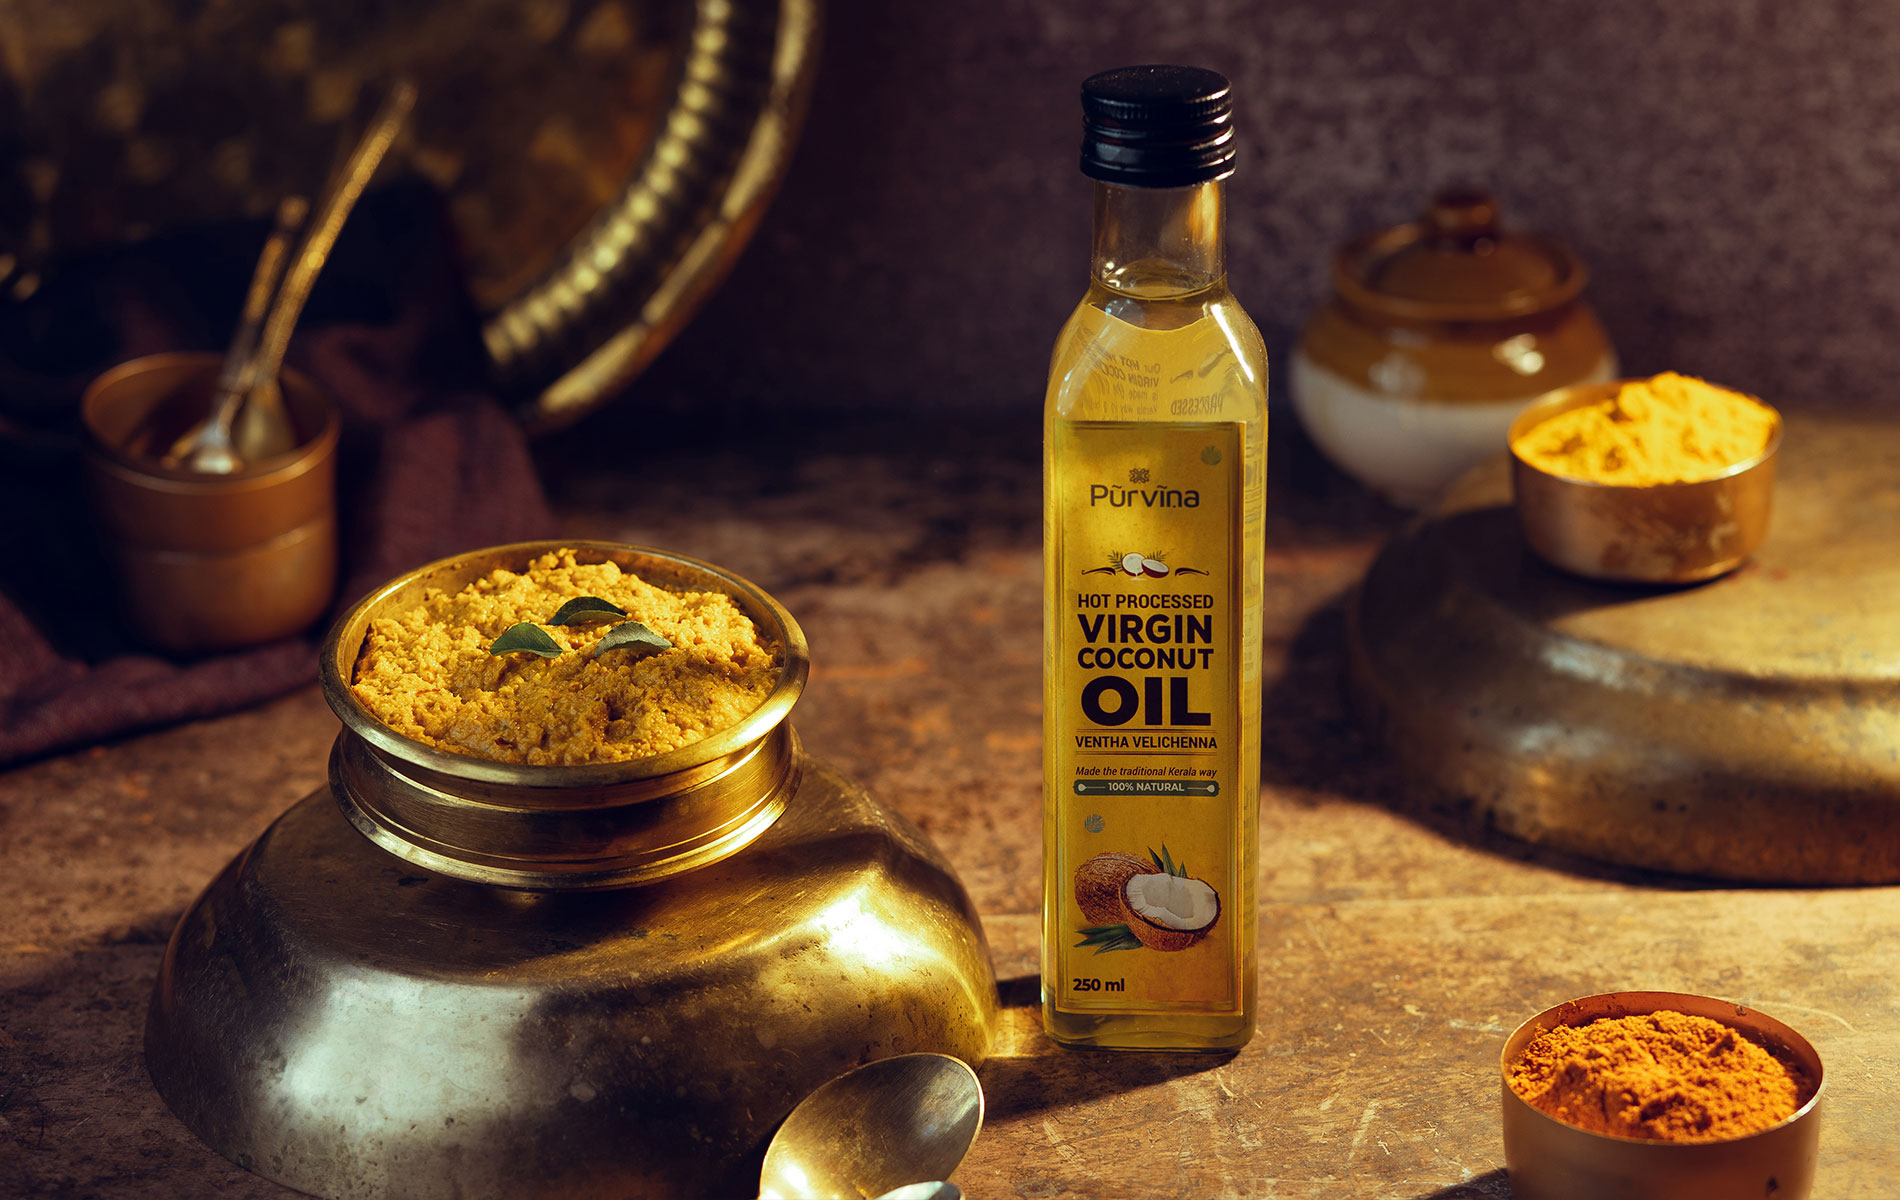 Mom-Daughter Entrepreneur Duo Revive Kerala's Traditional Coconut Oil Mix